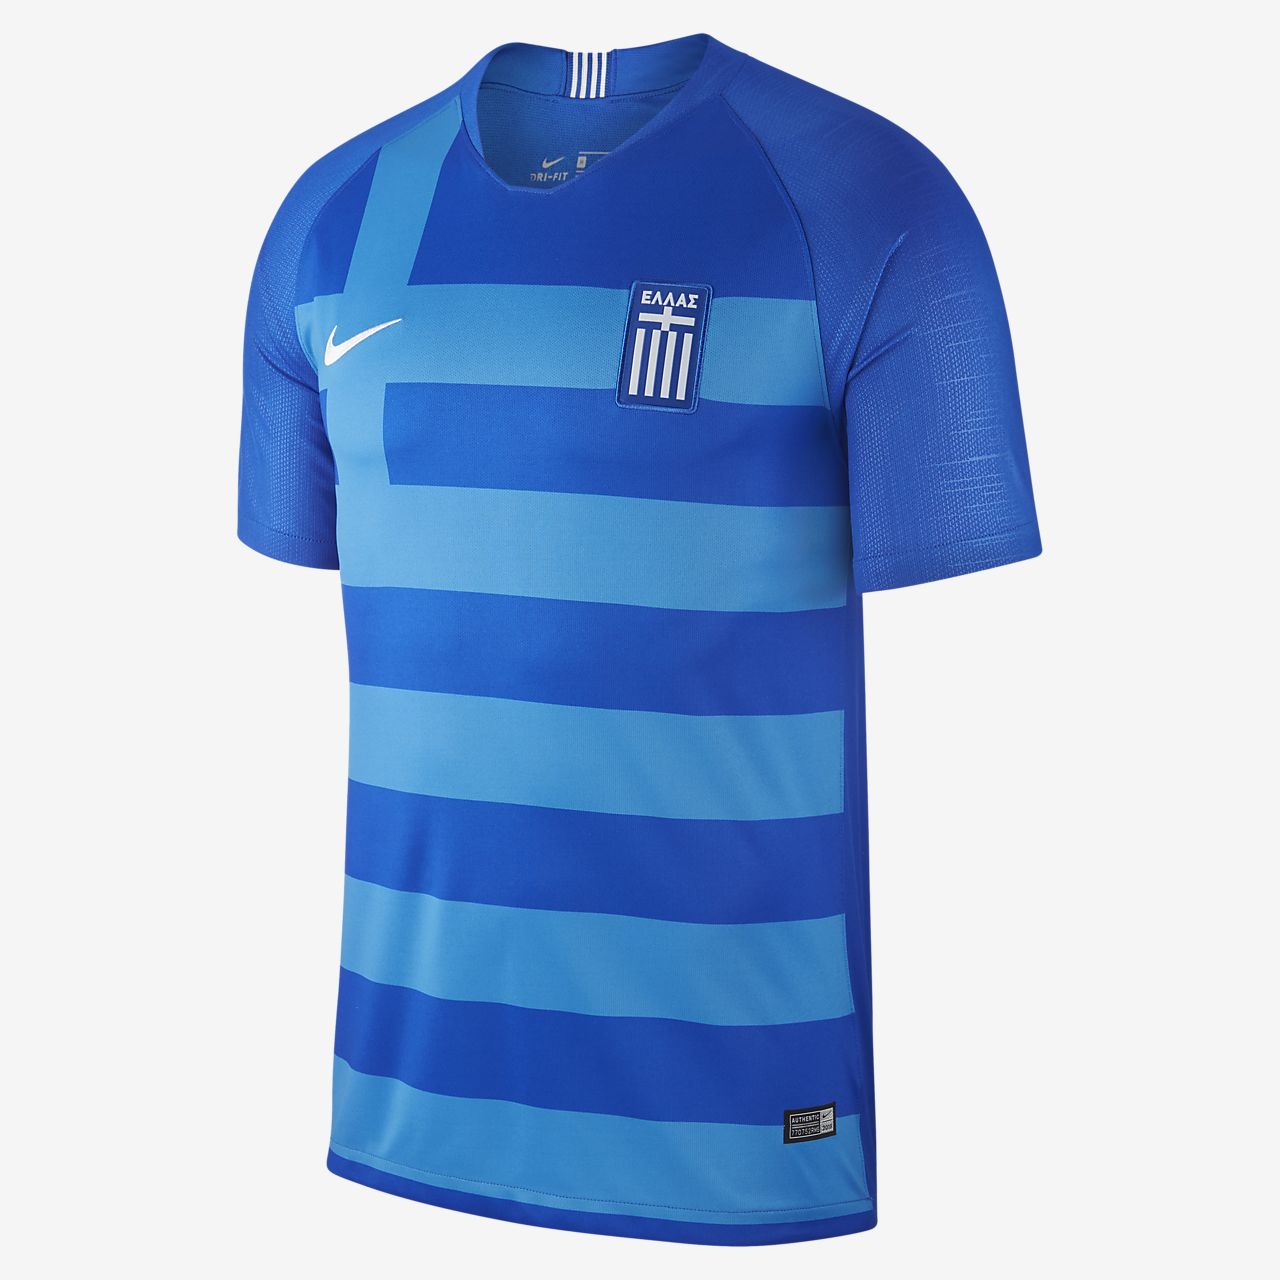 2018-greece-stadium-away-mens-soccer-jersey-nLnDm1.jpg